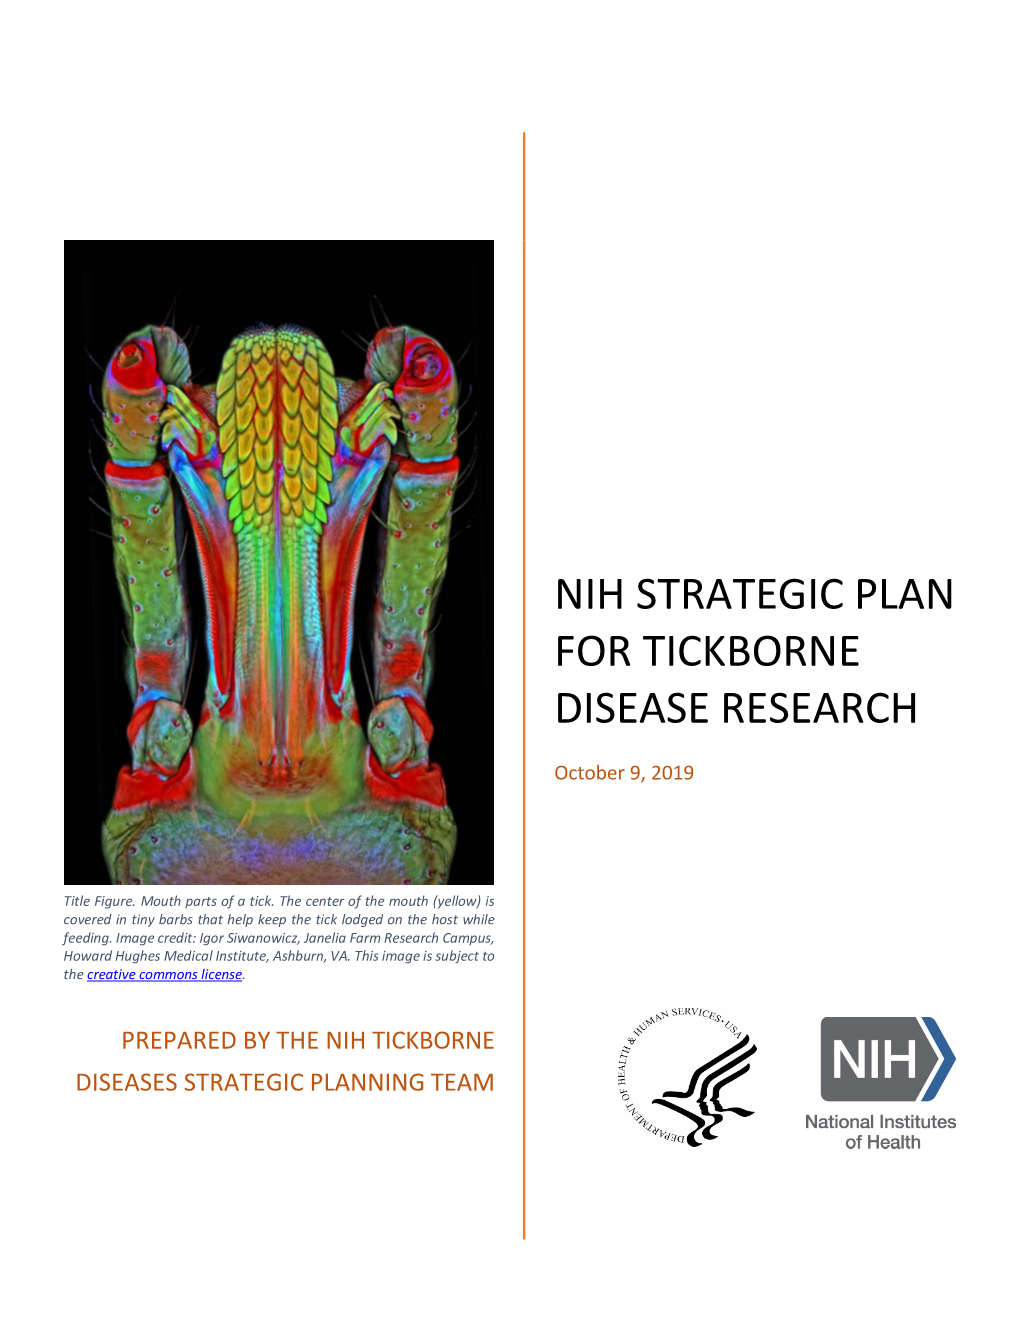 Nih Strategic Plan for Tickborne Disease Research